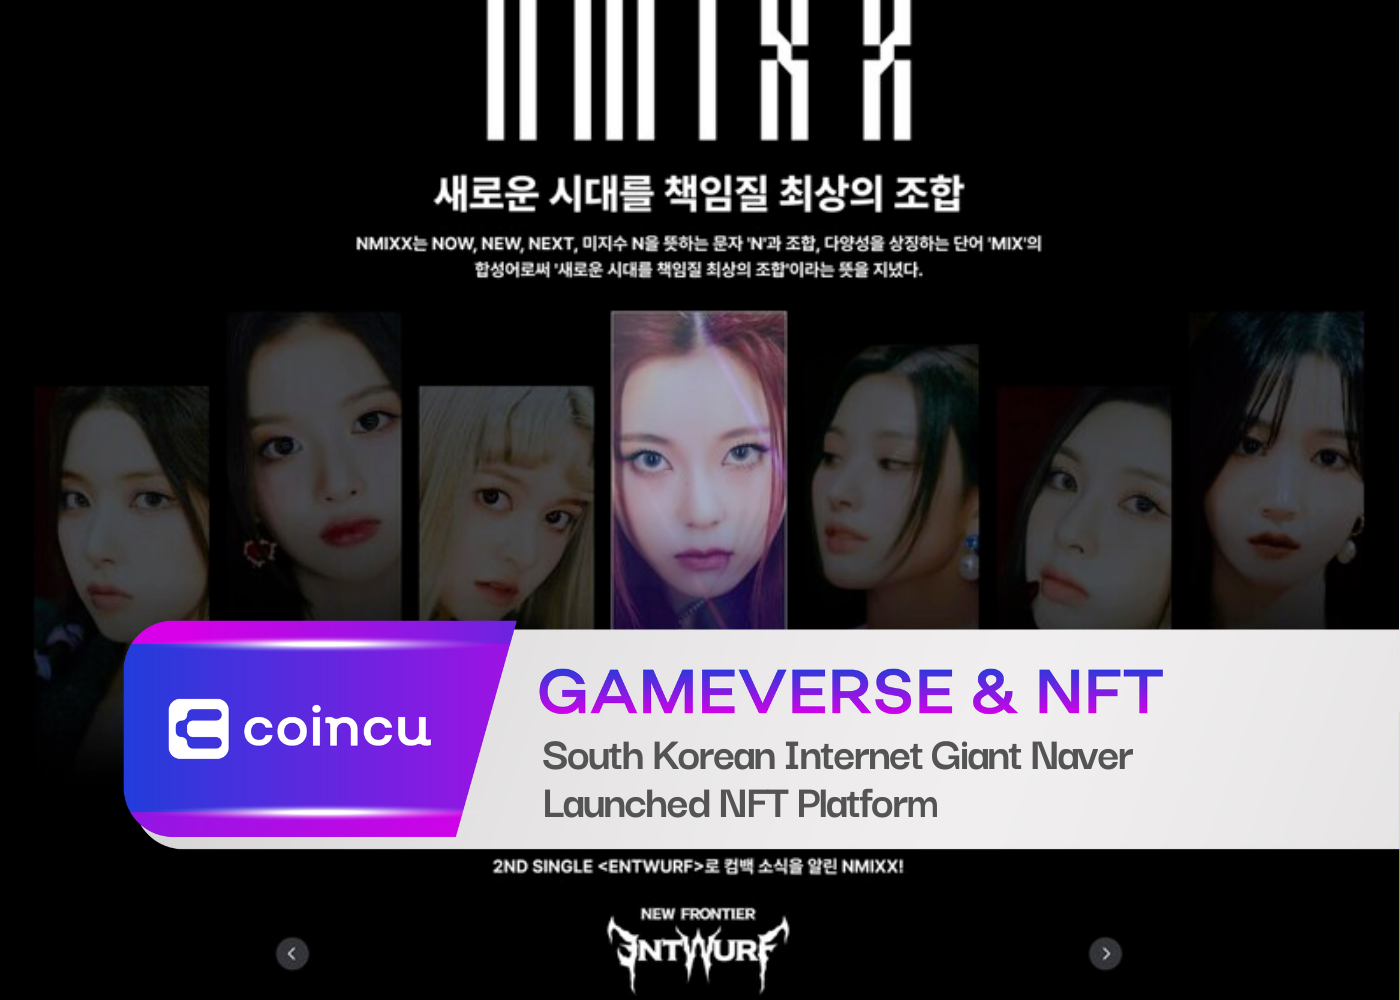 South Korean Internet Giant Naver Launched NFT Platform